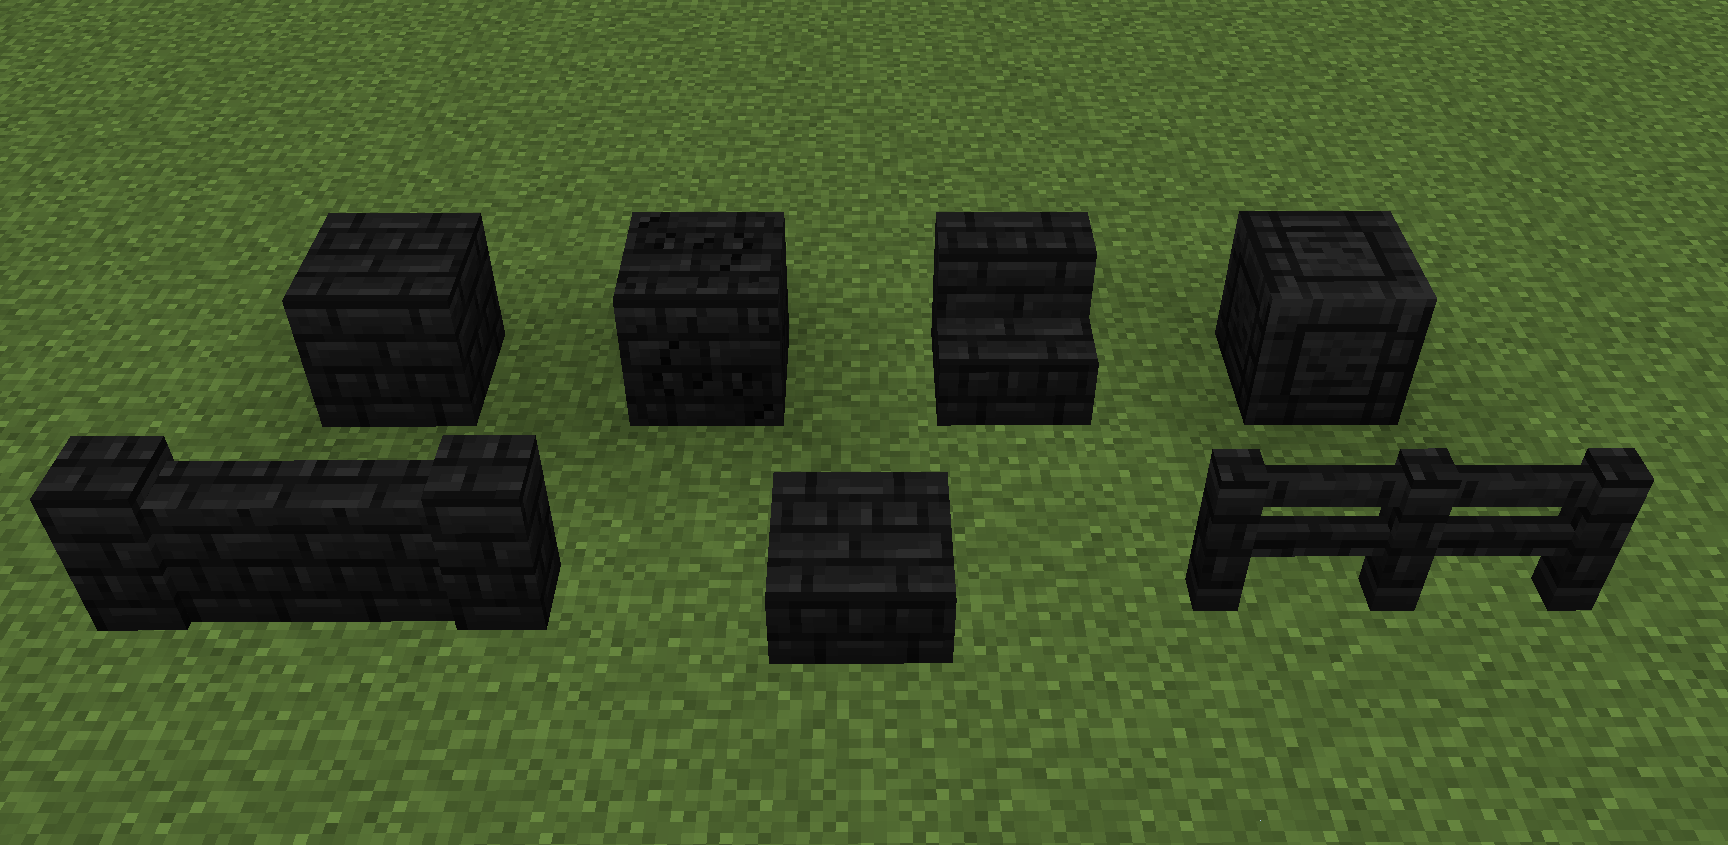 Black Nether Bricks!